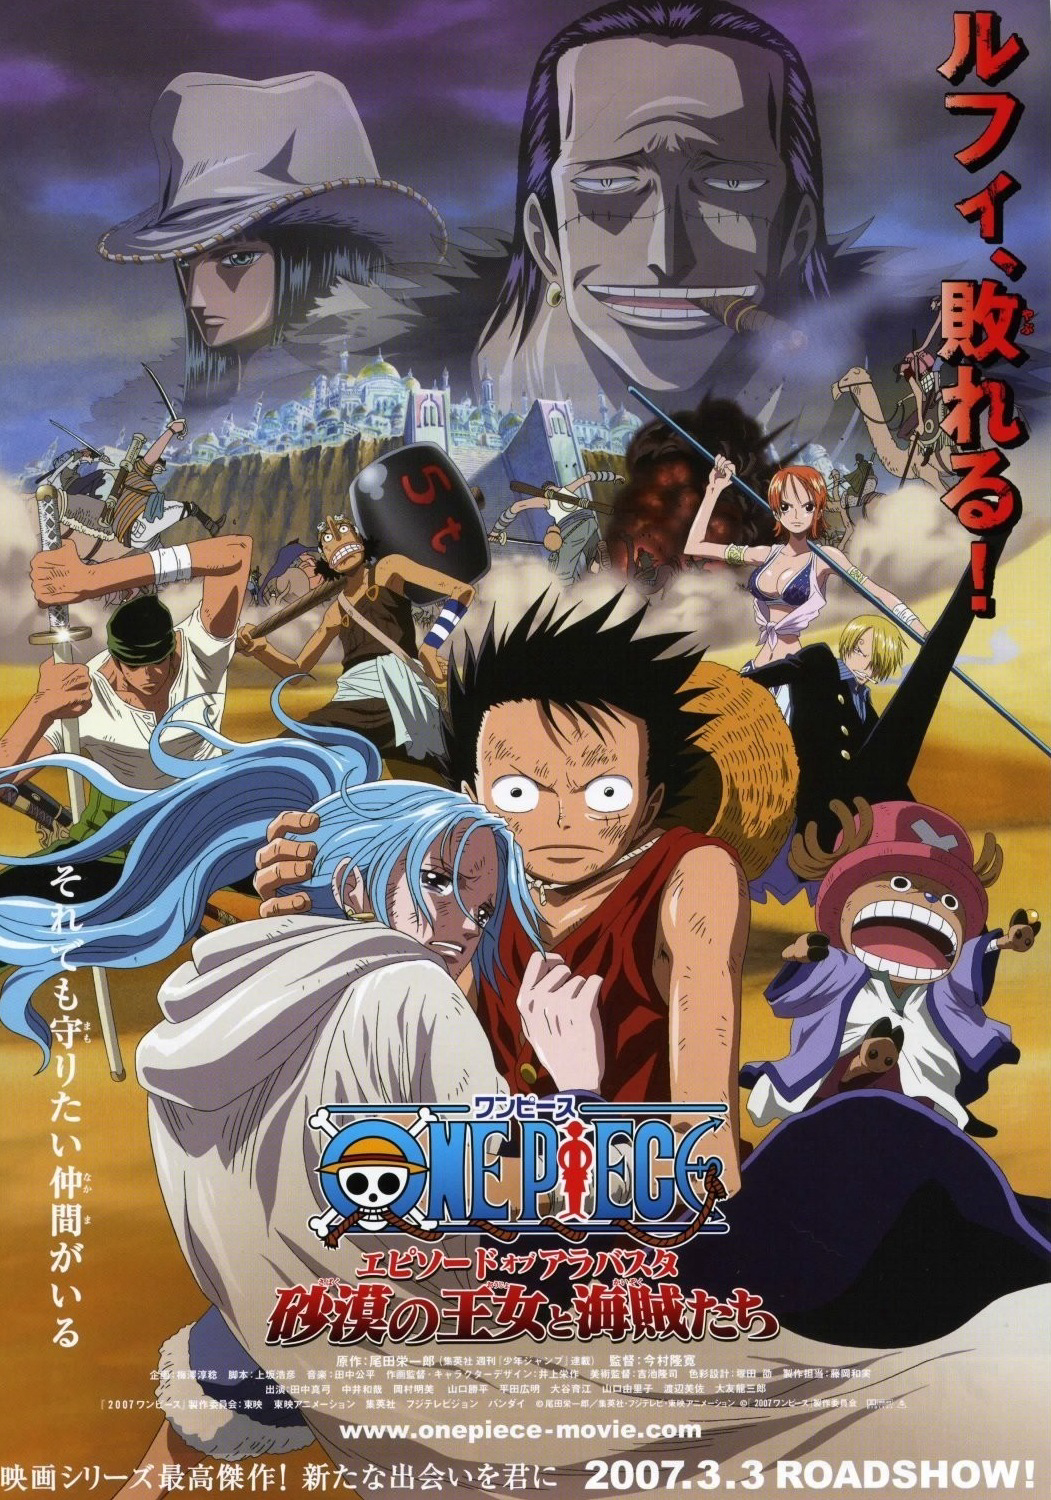 Poster Phim Vua Hải Tặc: Chương Alabasta - Công chúa sa mạc và hải tặc (One Piece the Movie Episode of Alabasta The Queen of the Desert and the Pirate (Movie 8))